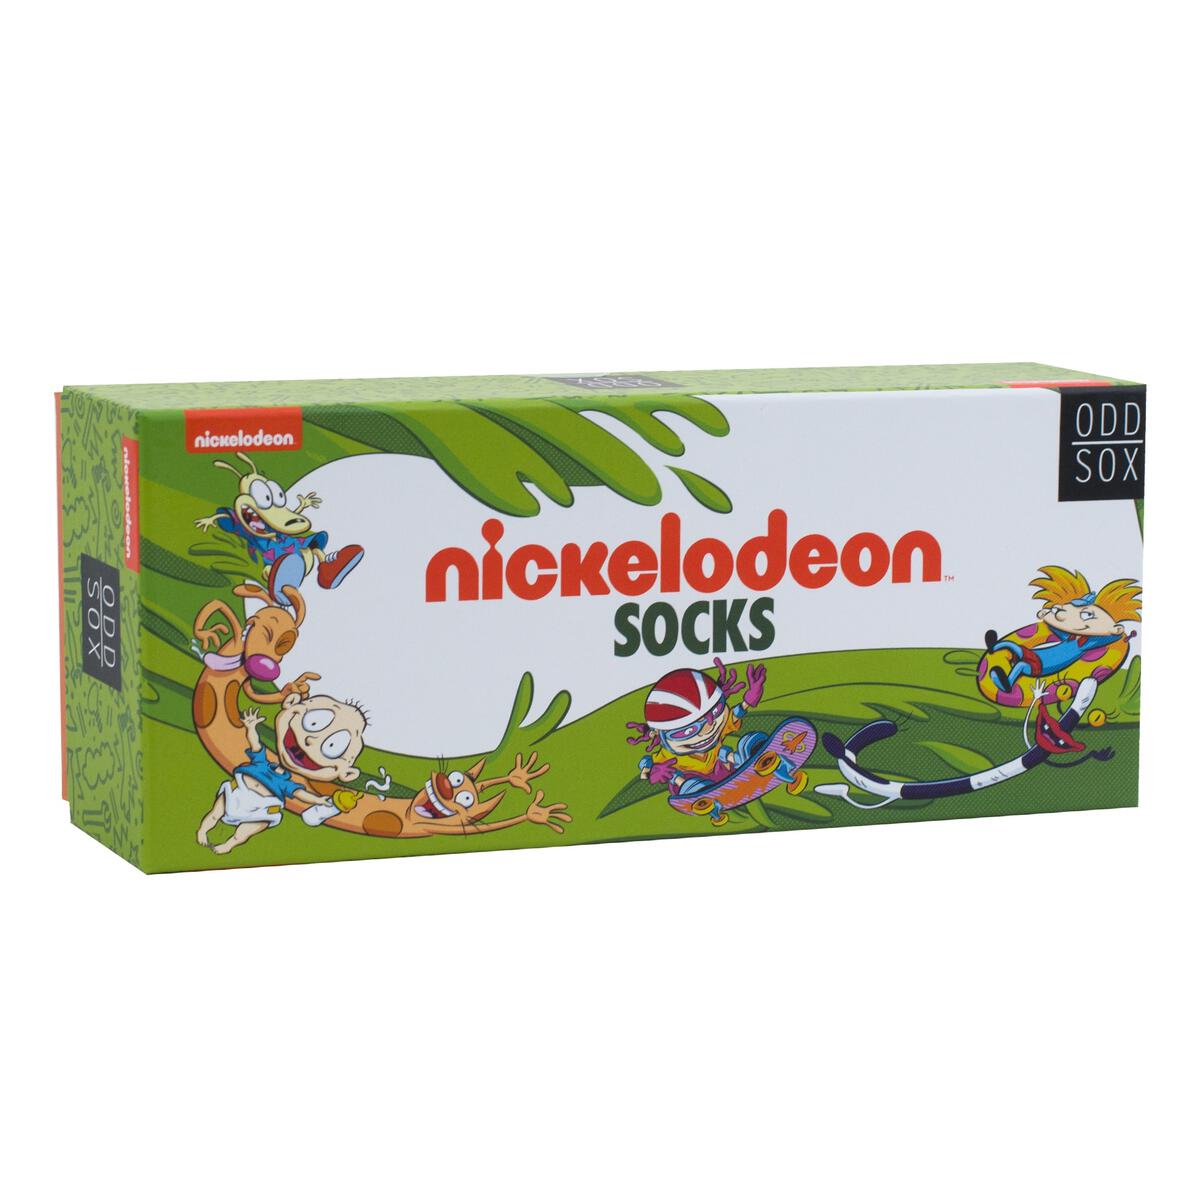 Odd Sox “Nickelodeon 5 Pack” Socks